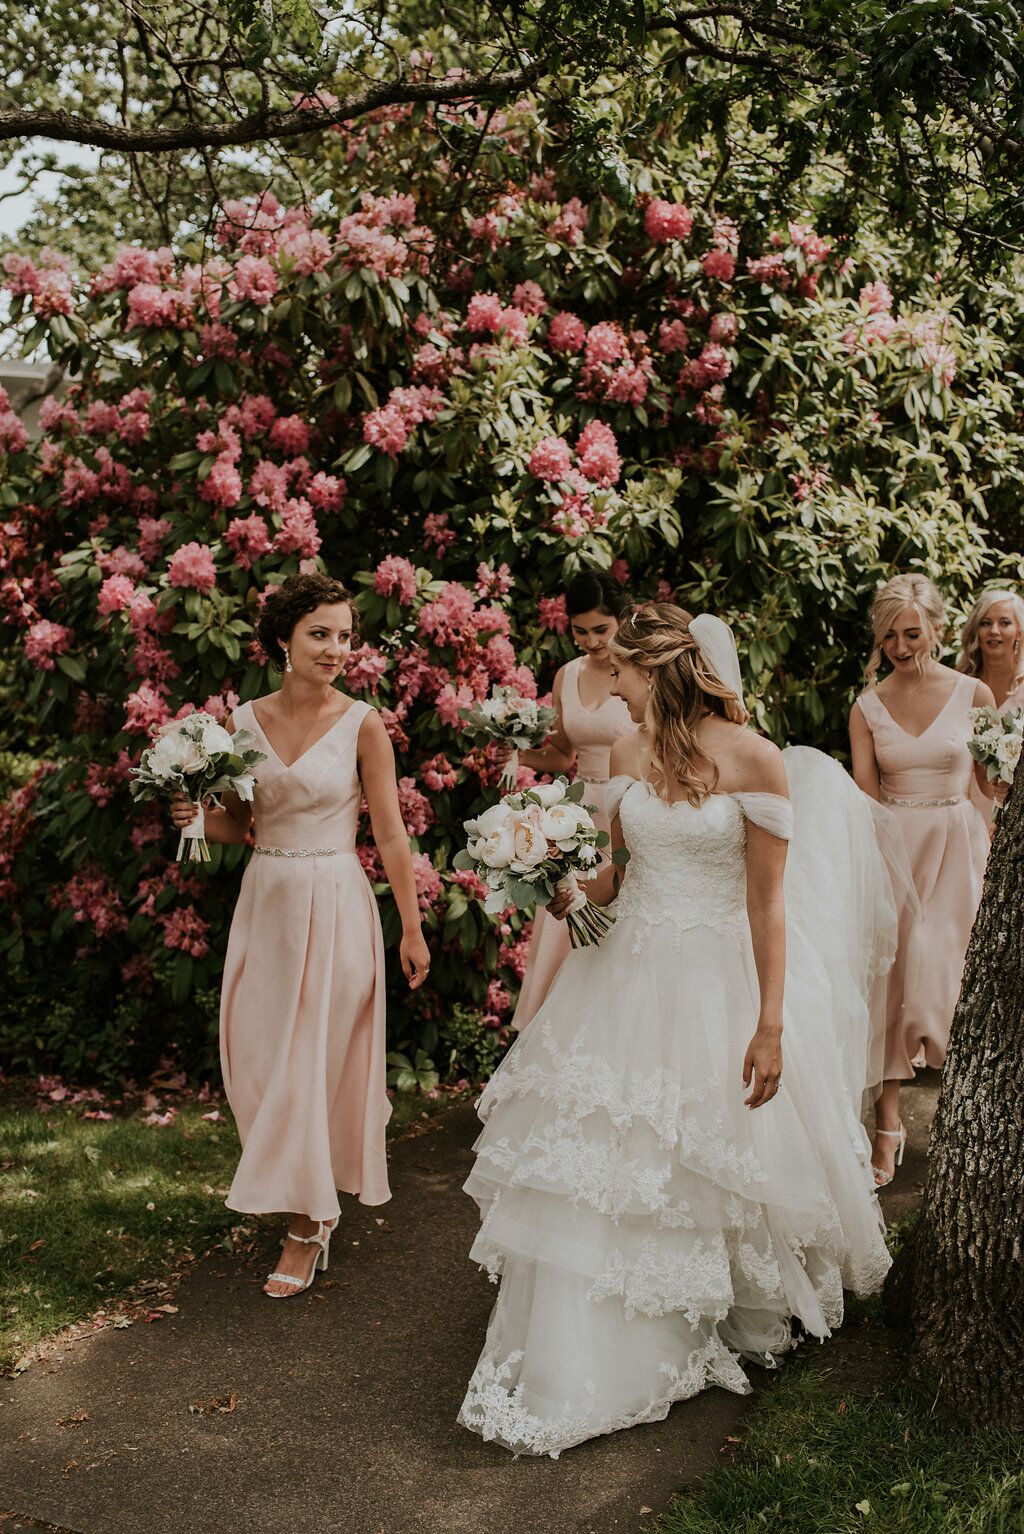 Romantic Bride Tribe walk along pink flowers on path